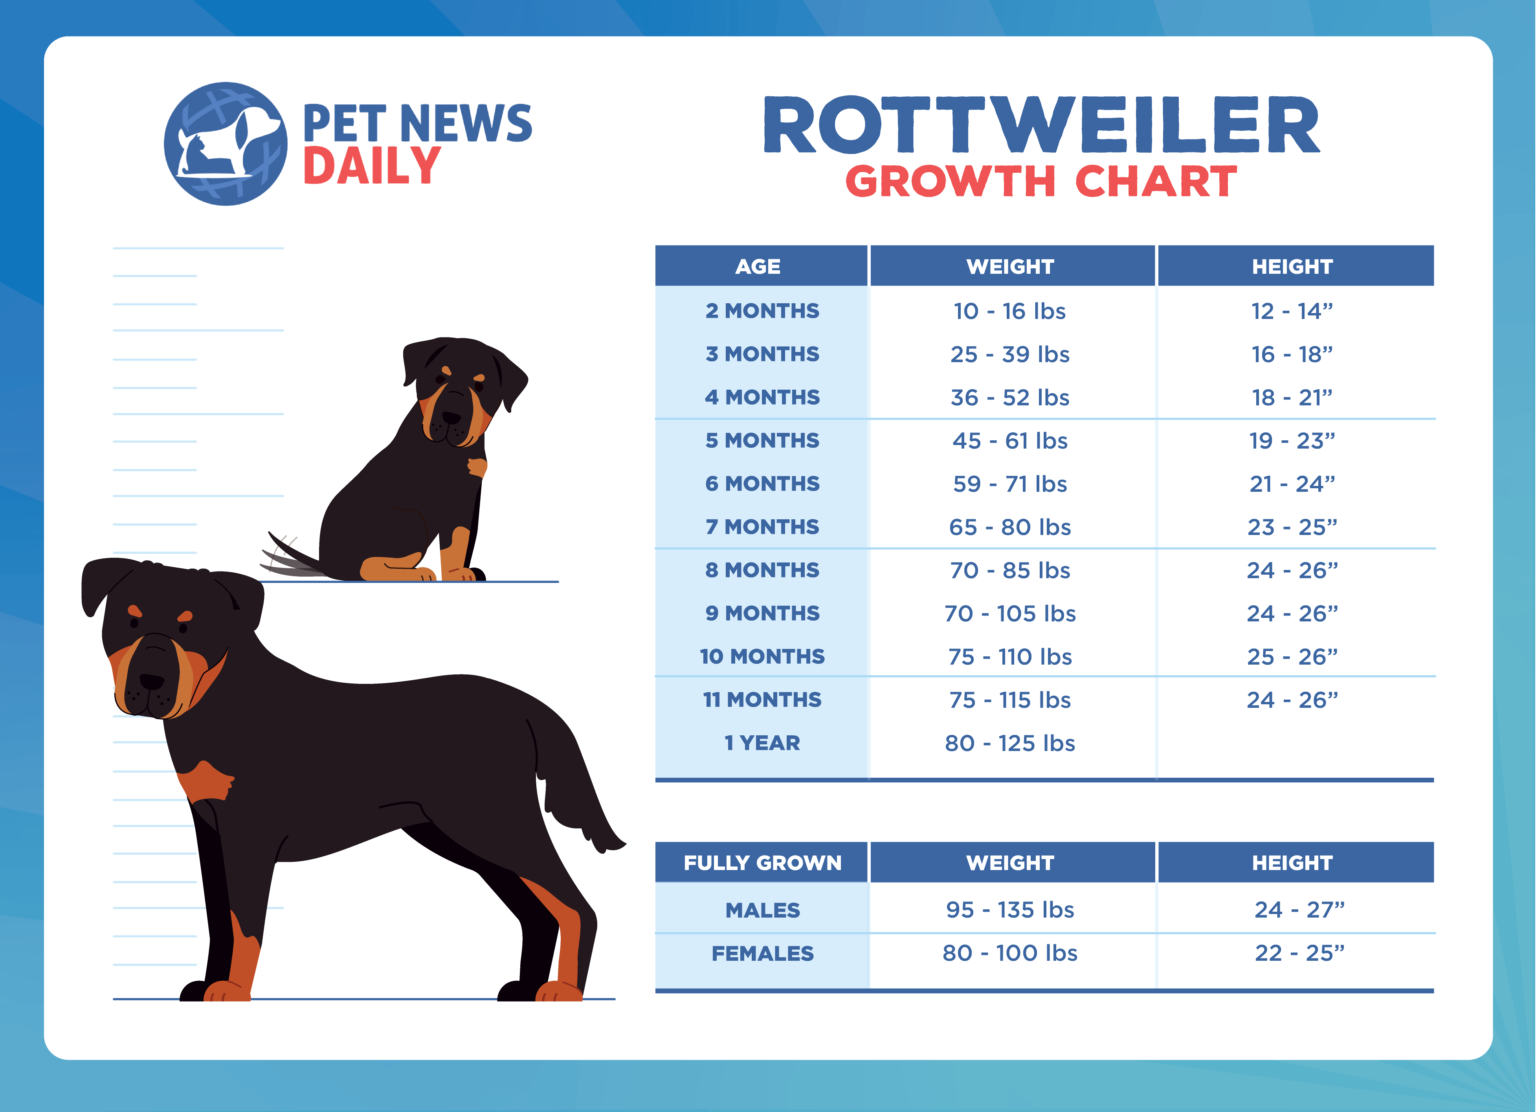 Rottweiler Growth Chart How Big Will Your Rottweiler Get? Pet News Daily